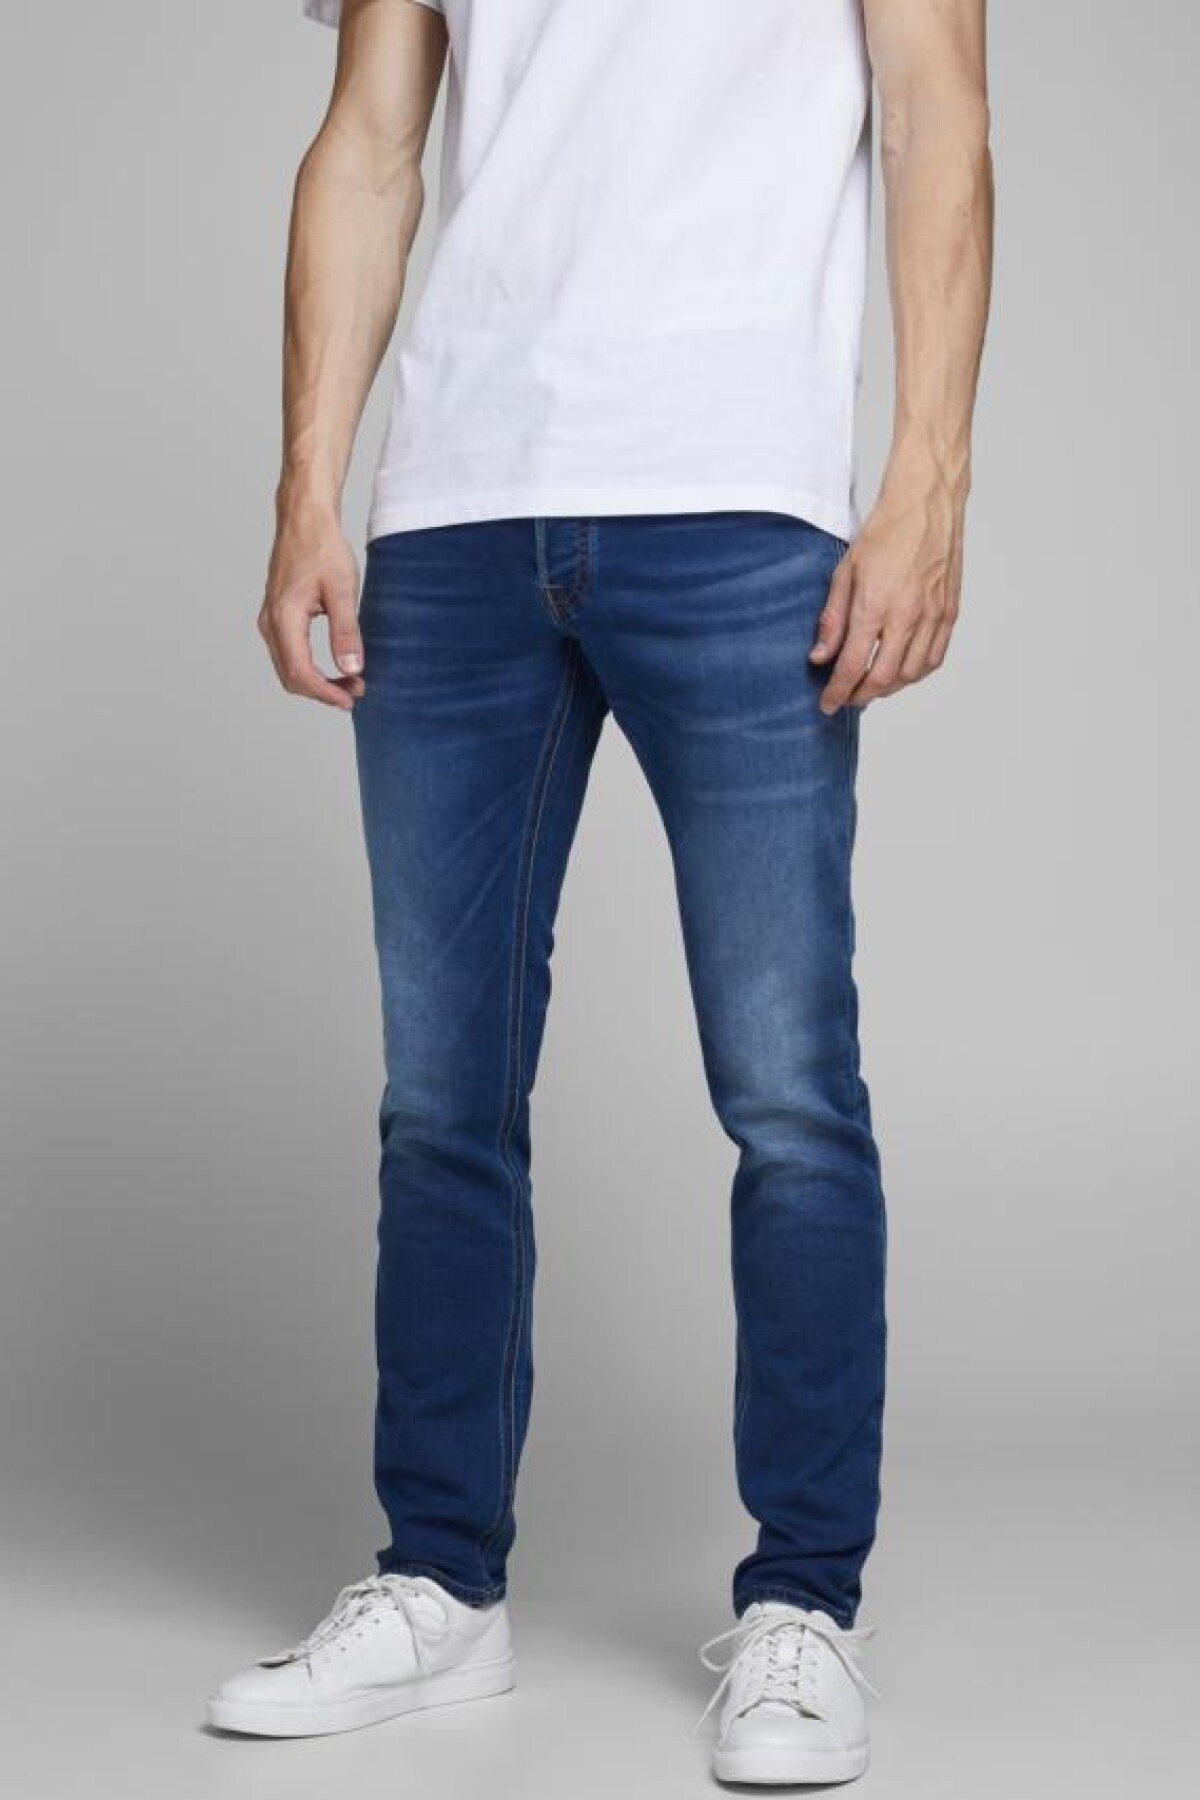 Jeans Slim Fit "glenn" Clásico Blue Denim